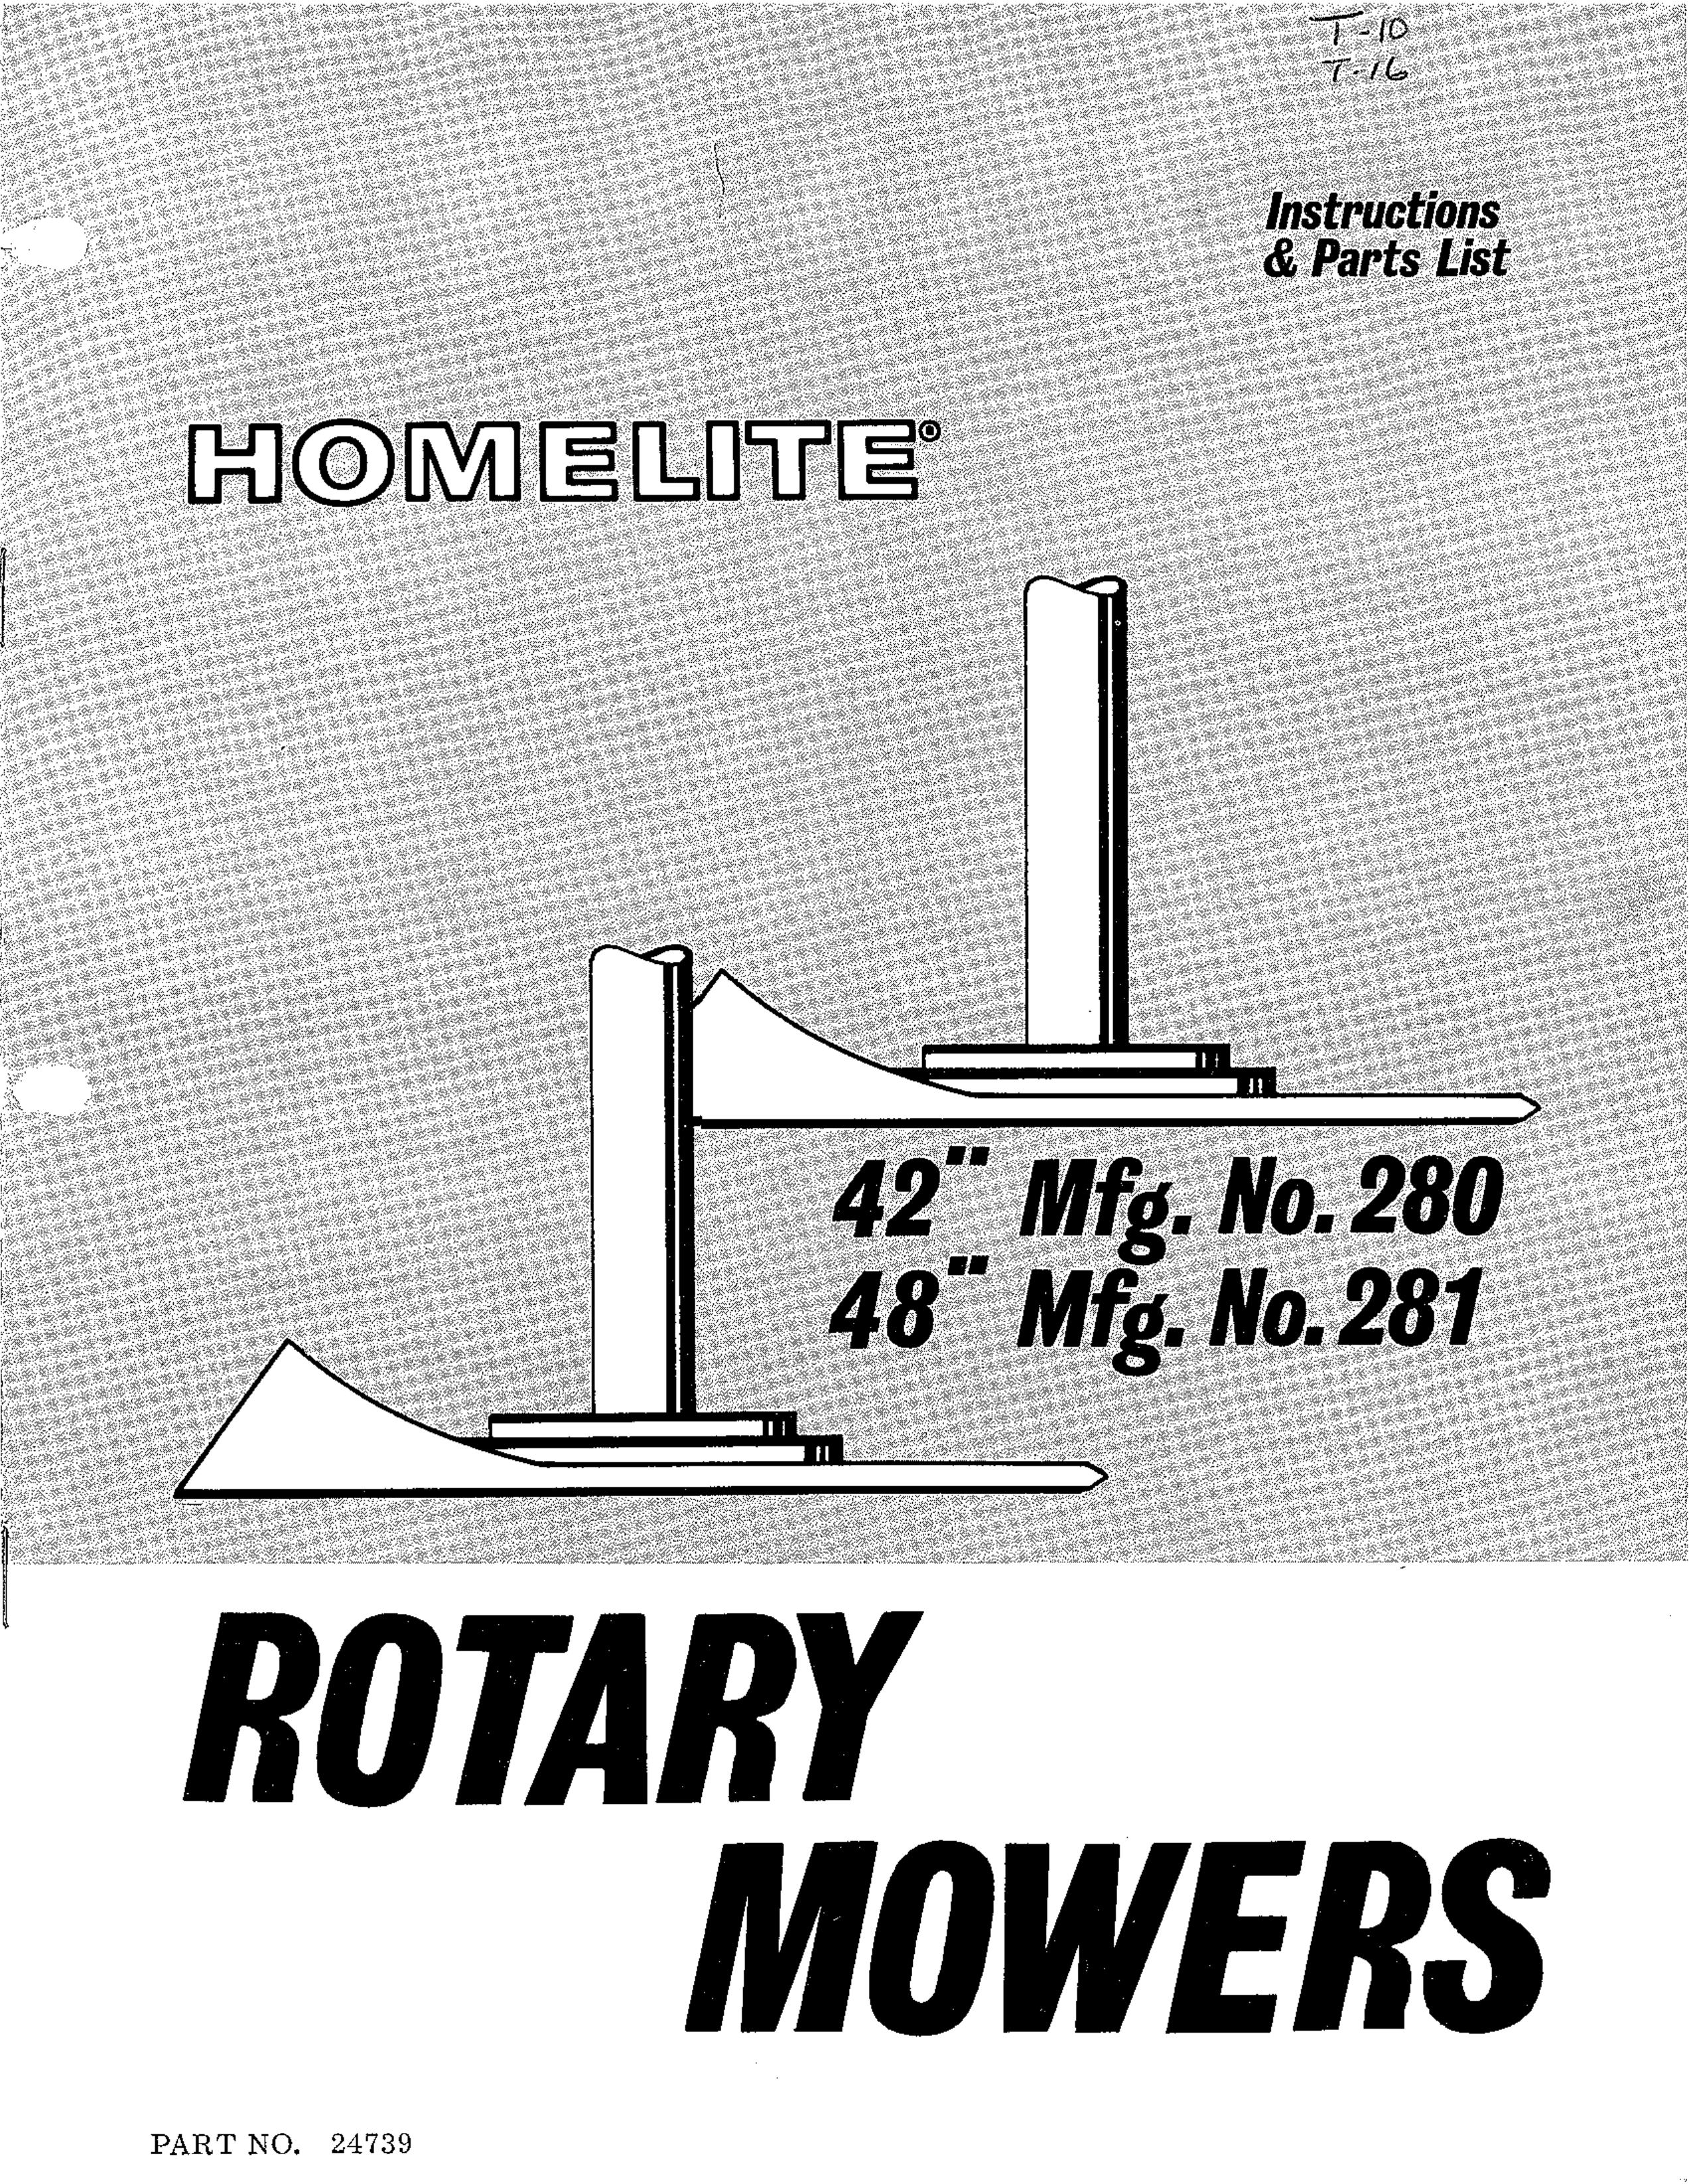 Homelite Rotary Mowers Lawn Mower User Manual